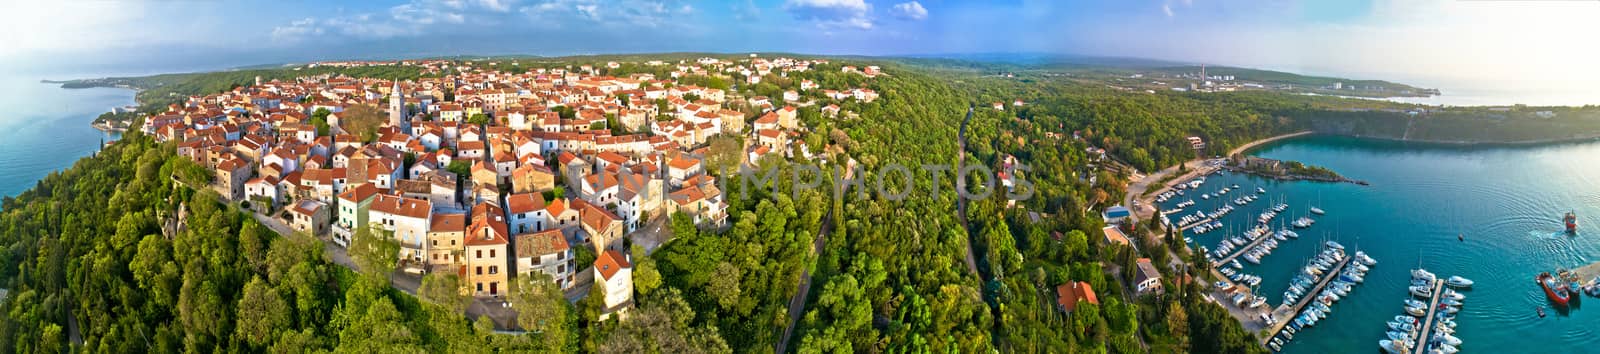 Town of Omisalj on Krk island aerial panorama by xbrchx